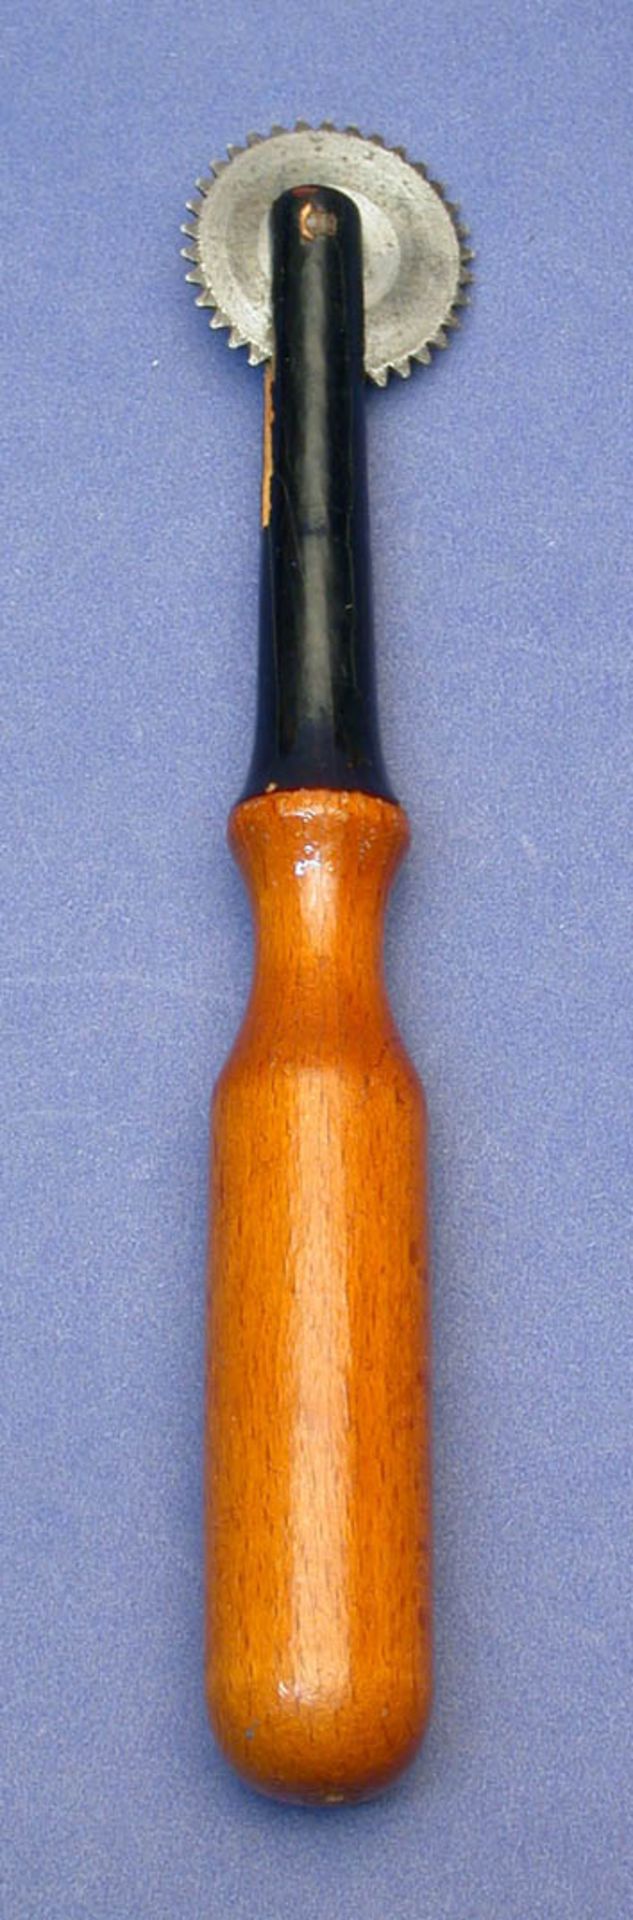 Schnittmuster-Markierer, um 1900 Metall und gedrechseltes, lackiertes Holz.